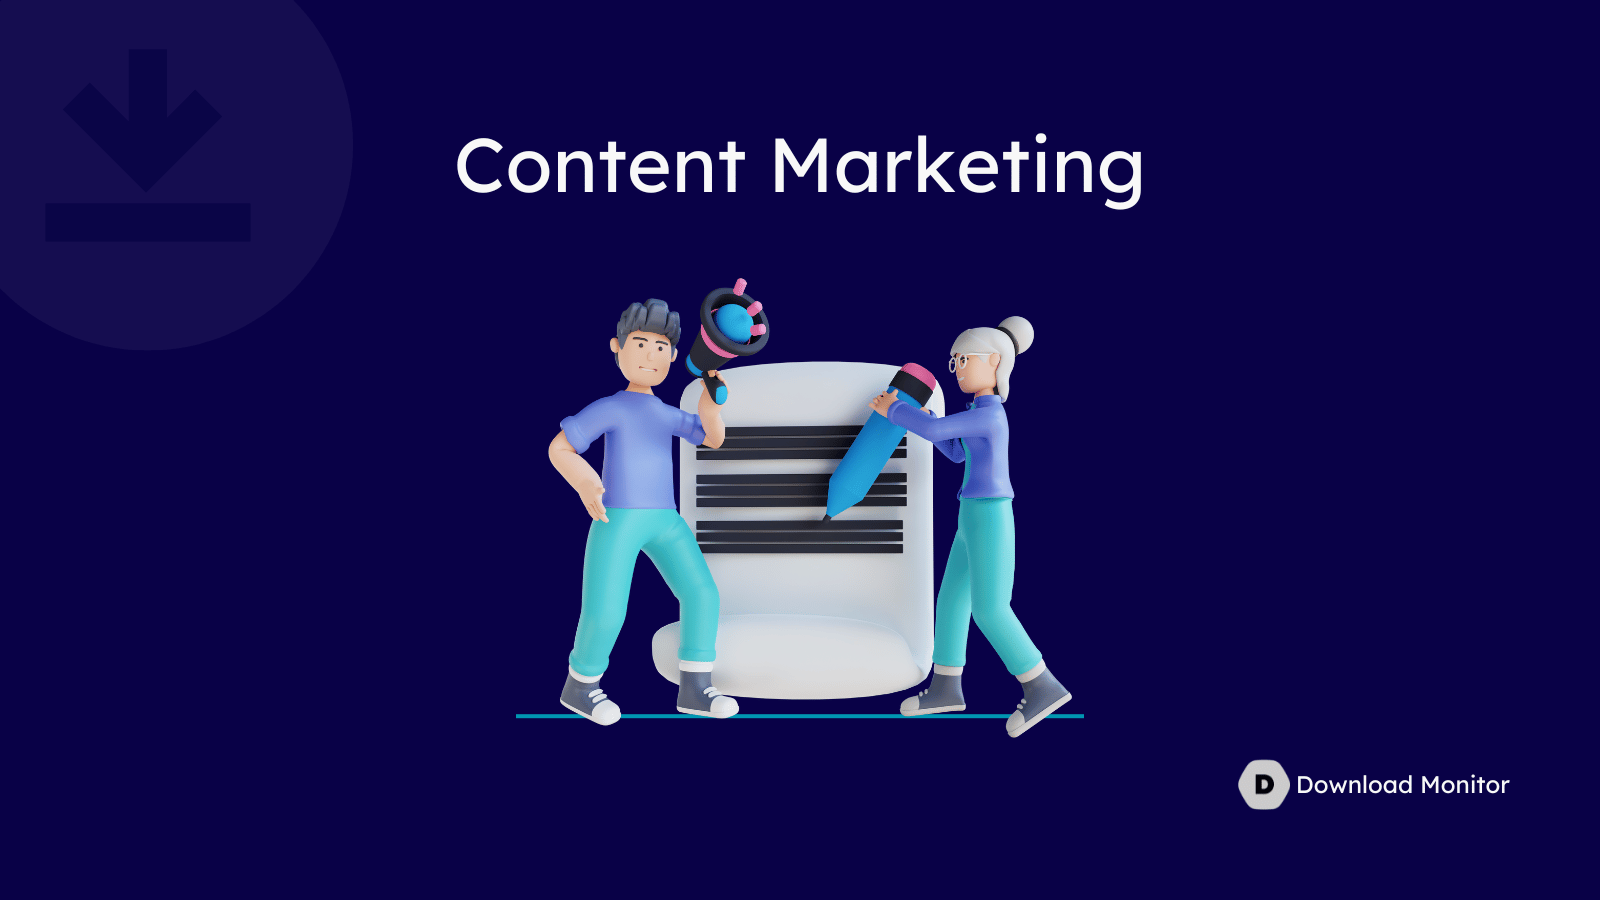 i) Content Marketing